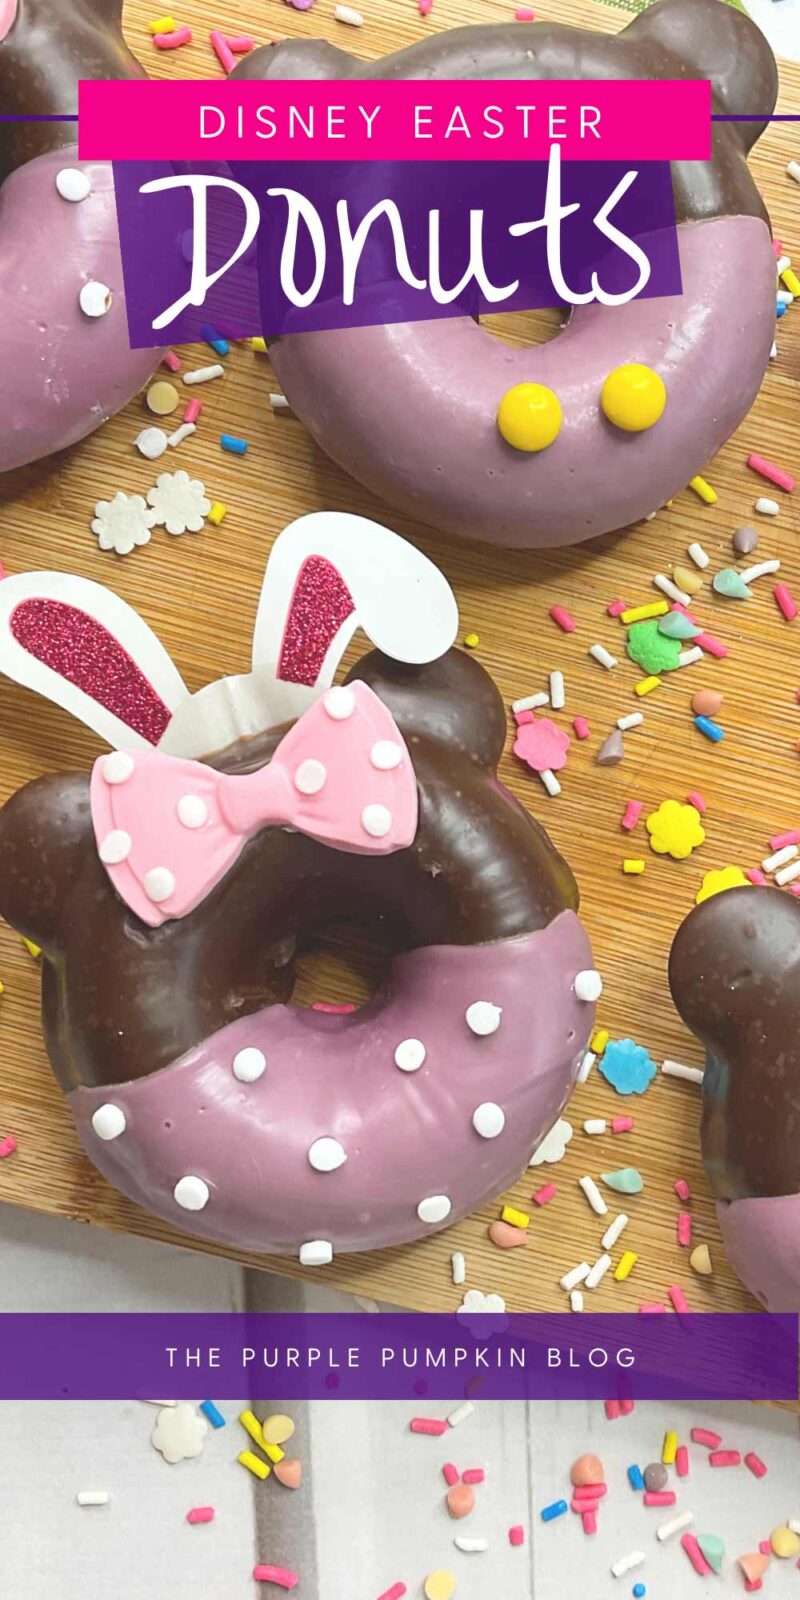 Disney Easter Donuts